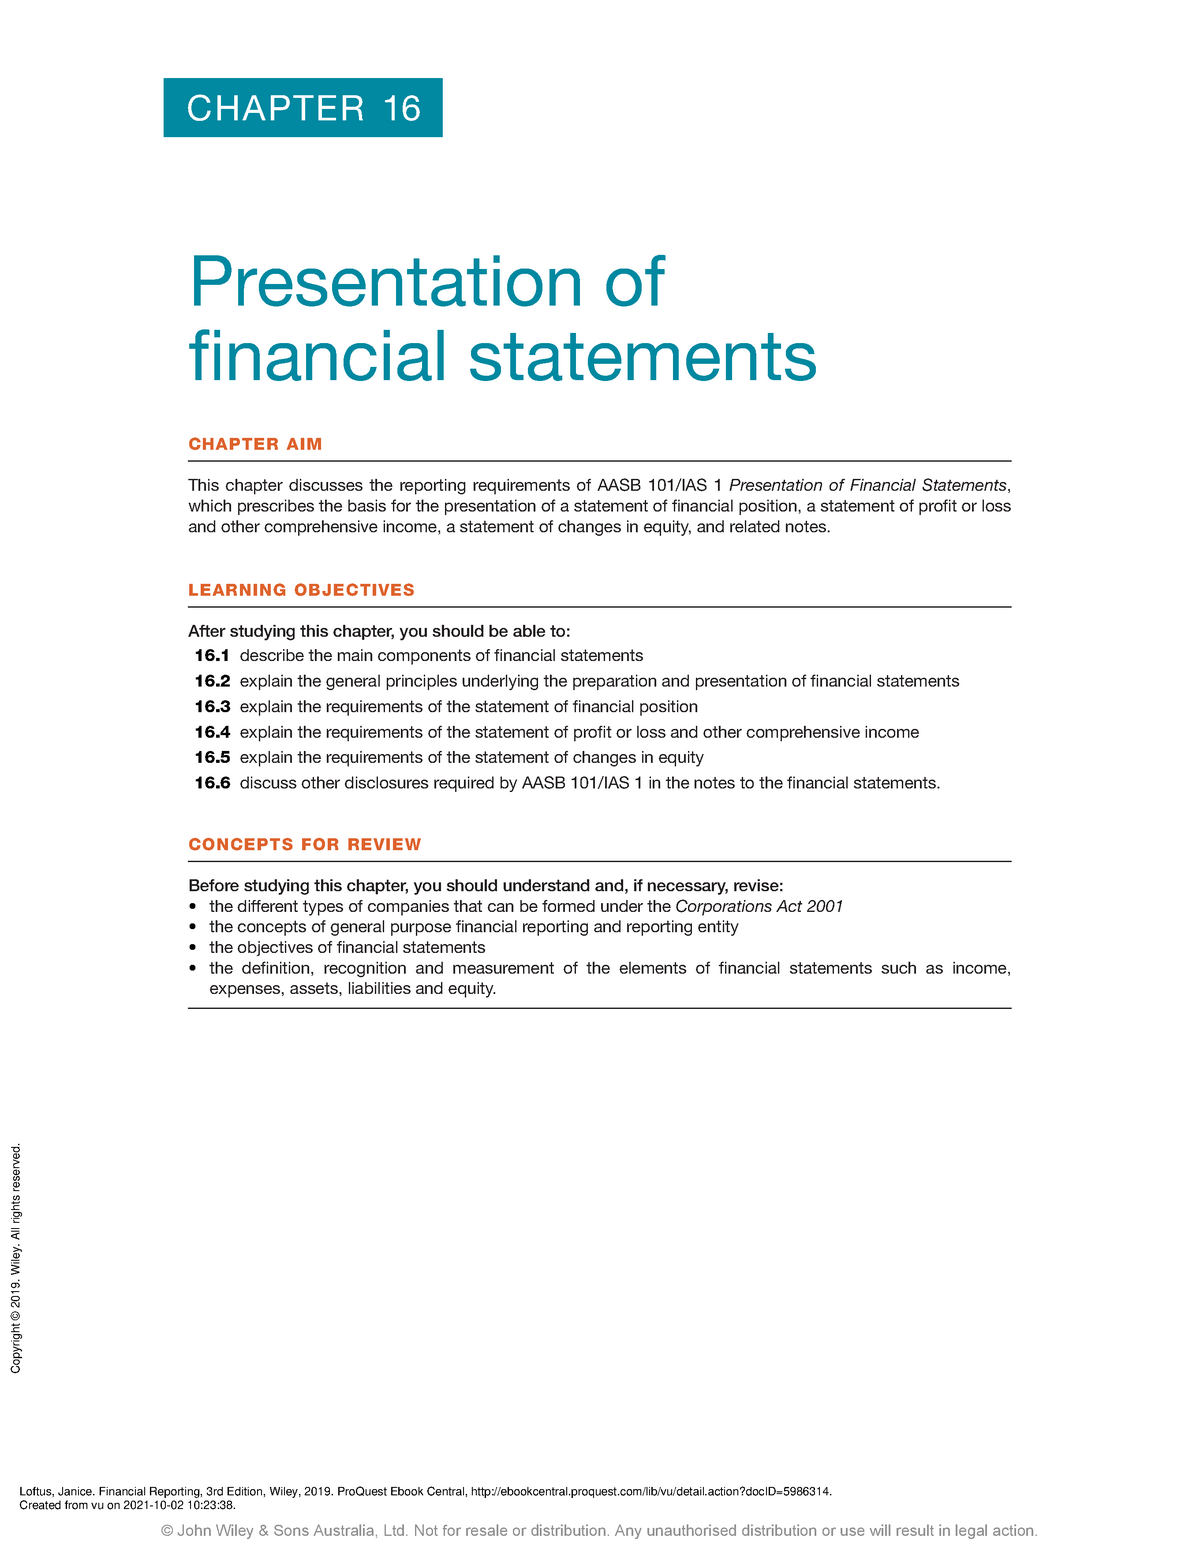 fair presentation of financial statements